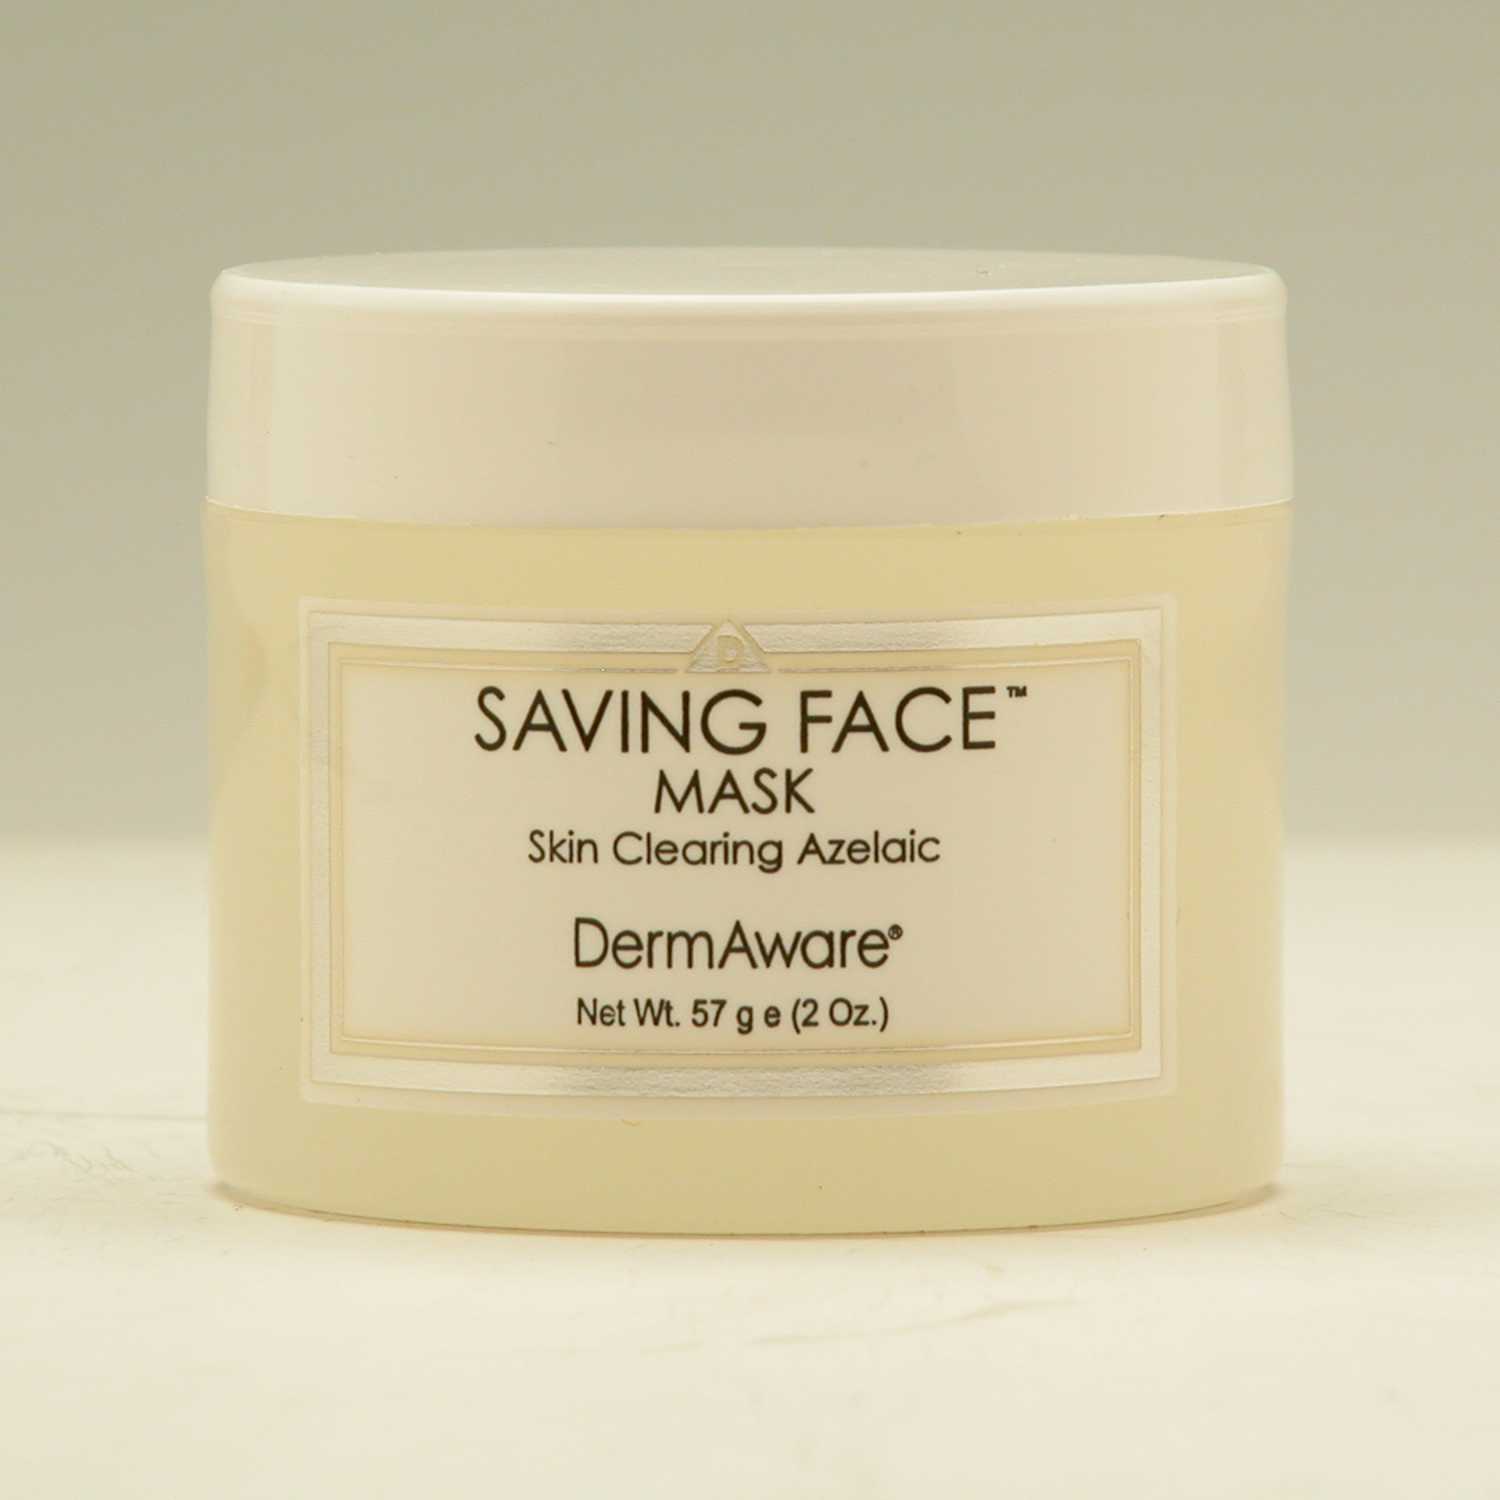 Saving Face, Azelaic Mask, 2 oz